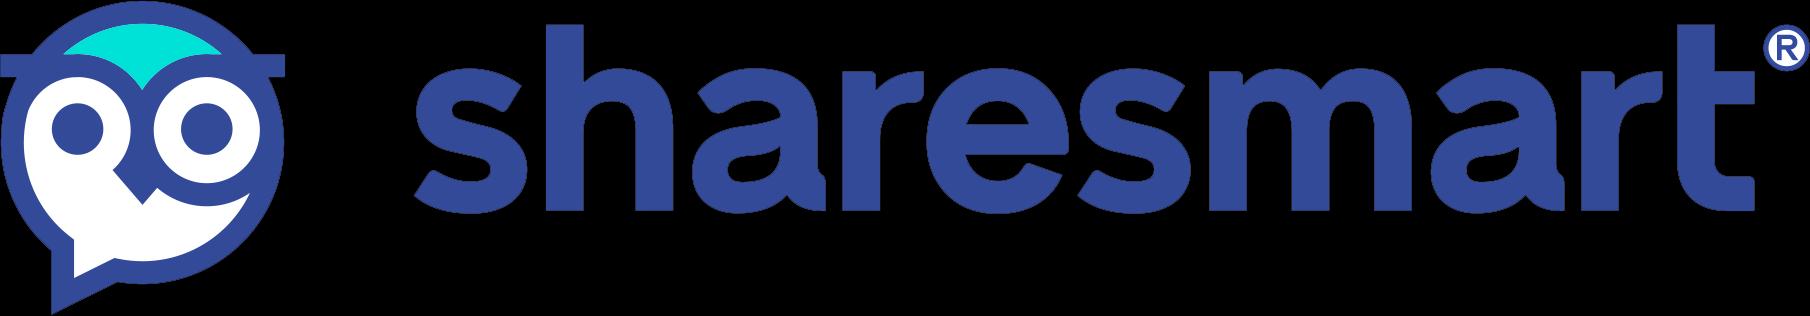 ShareSmart_logo